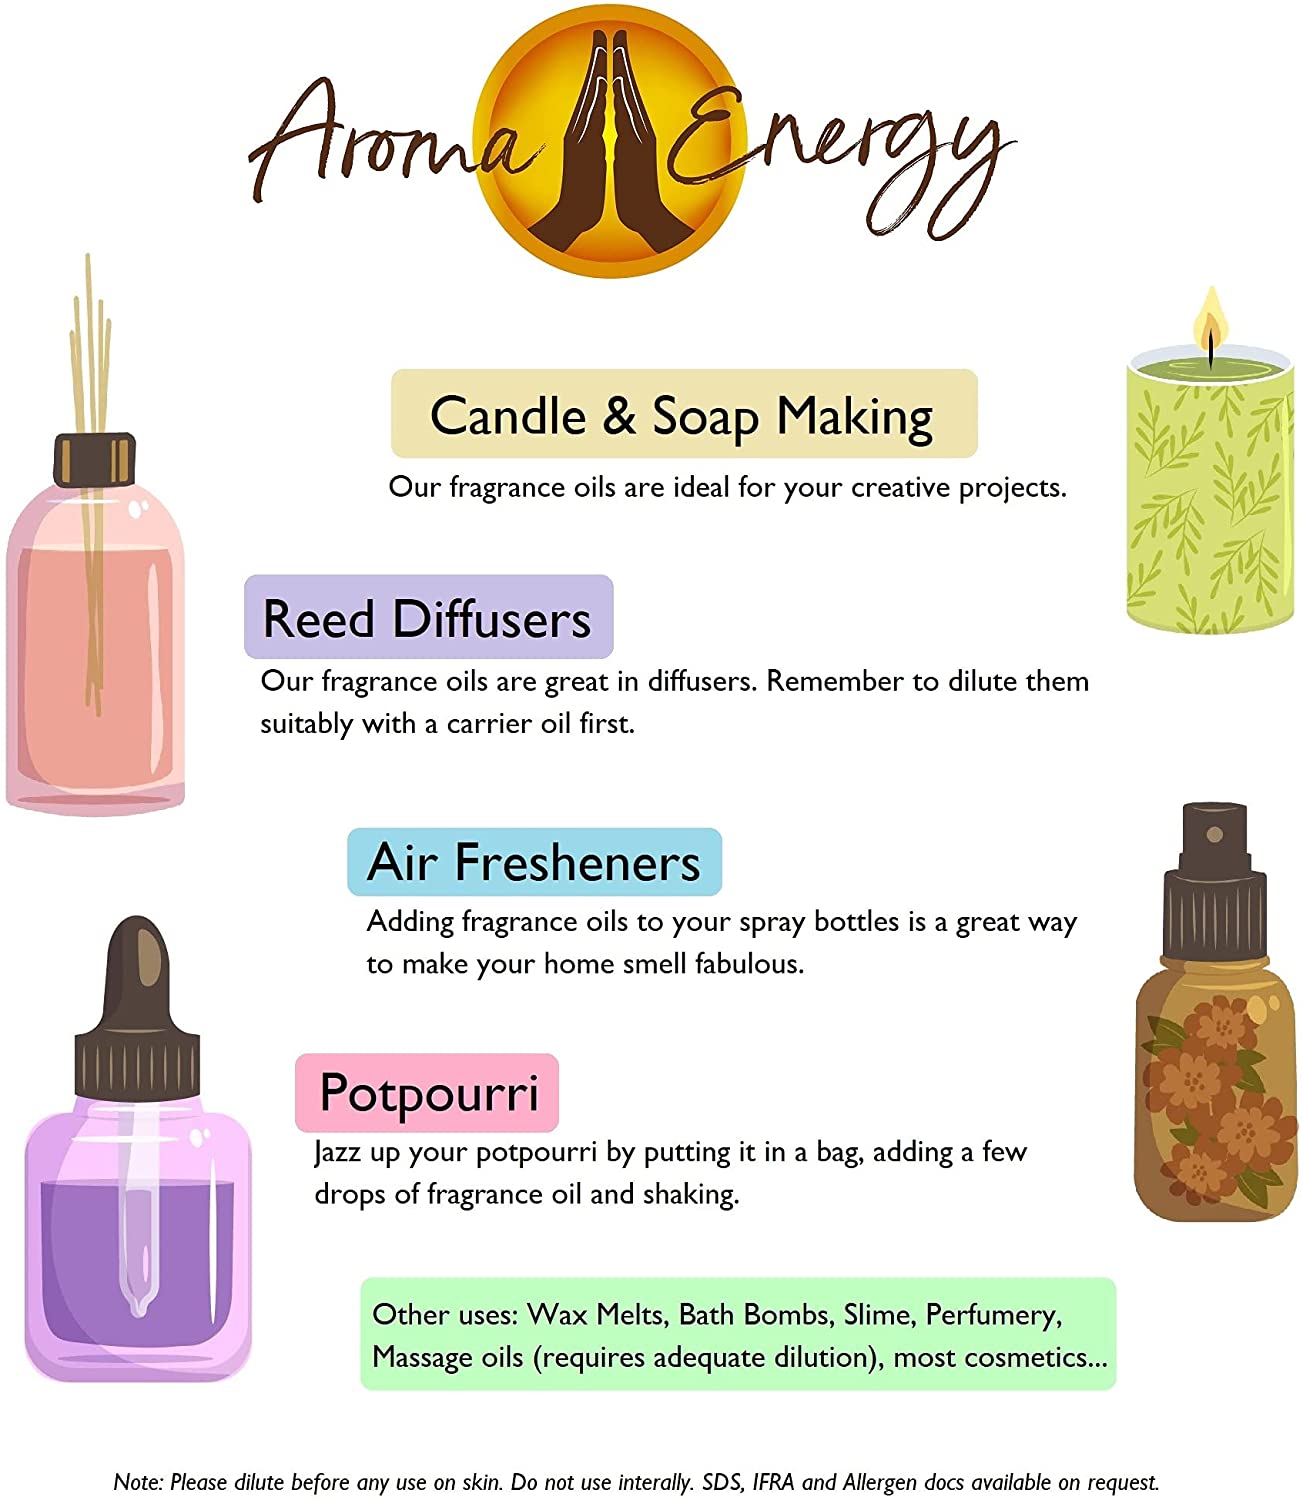 Passion Fruit Fragrance Oil - Aroma Energy